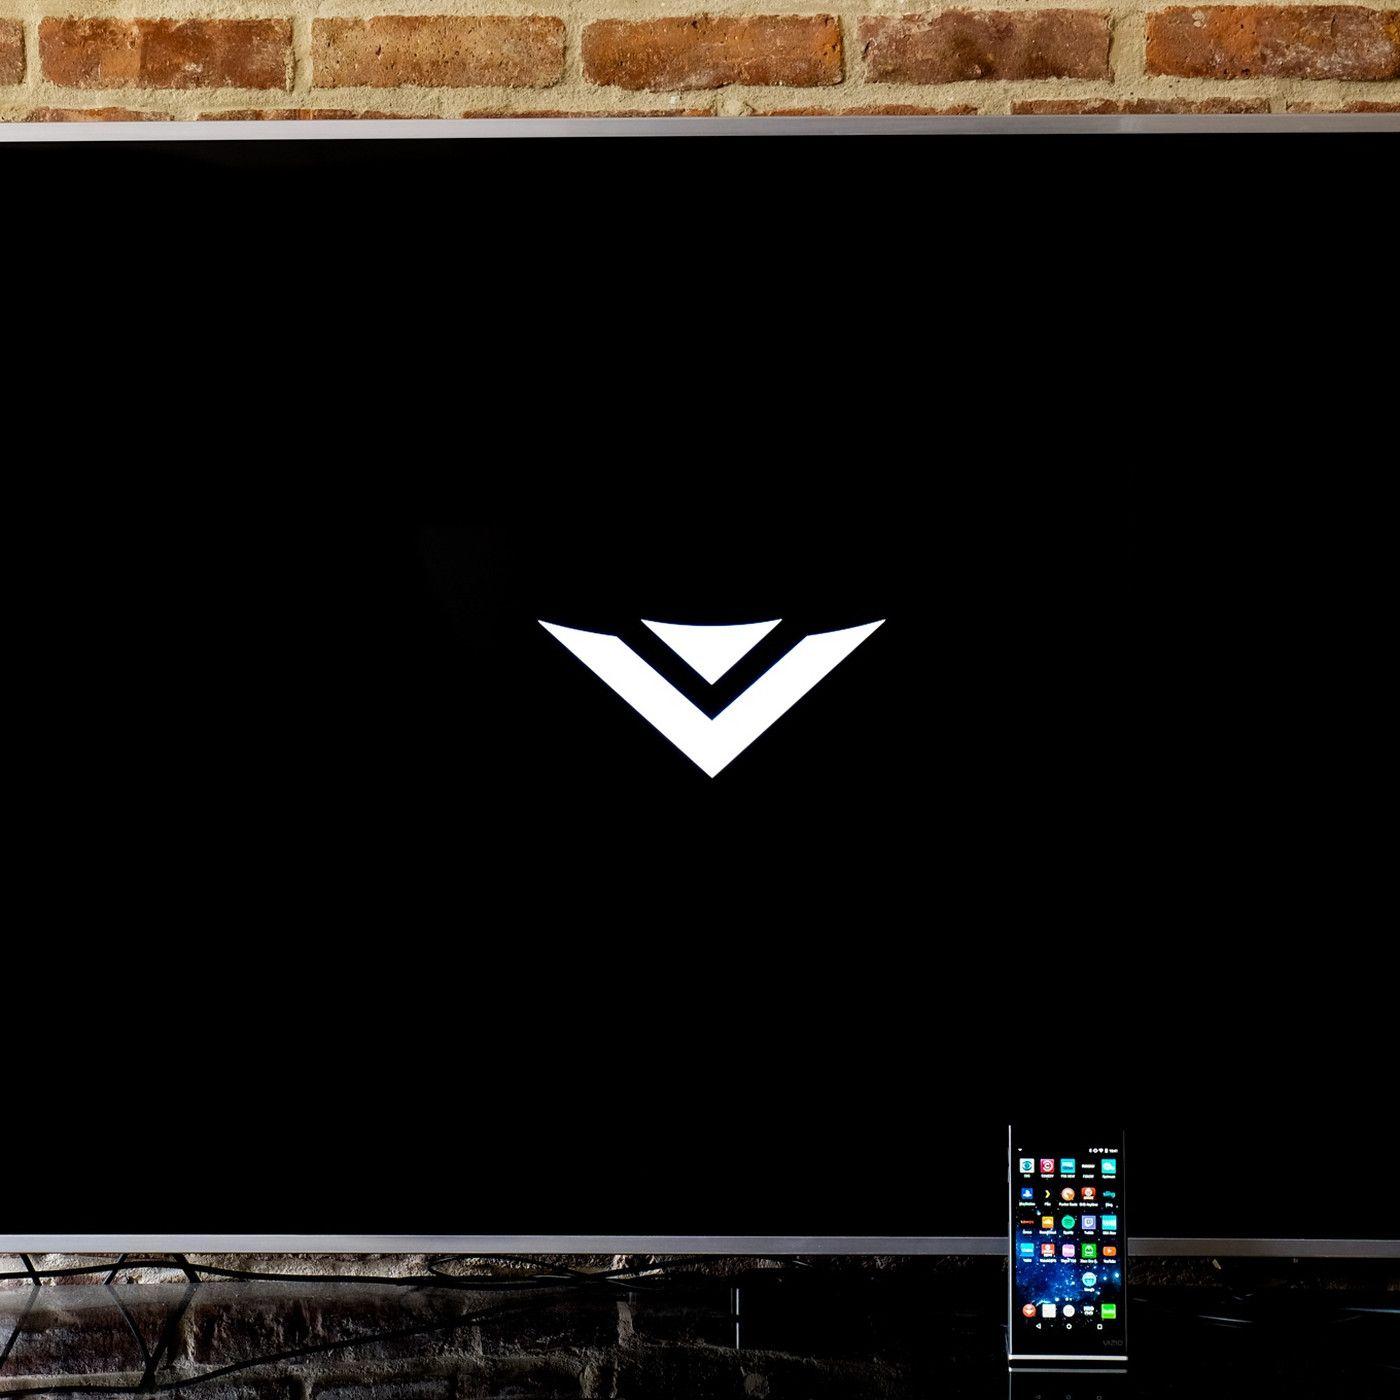 Vizio TV Logo - Vizio may soon inform customers when its smart TVs are spying